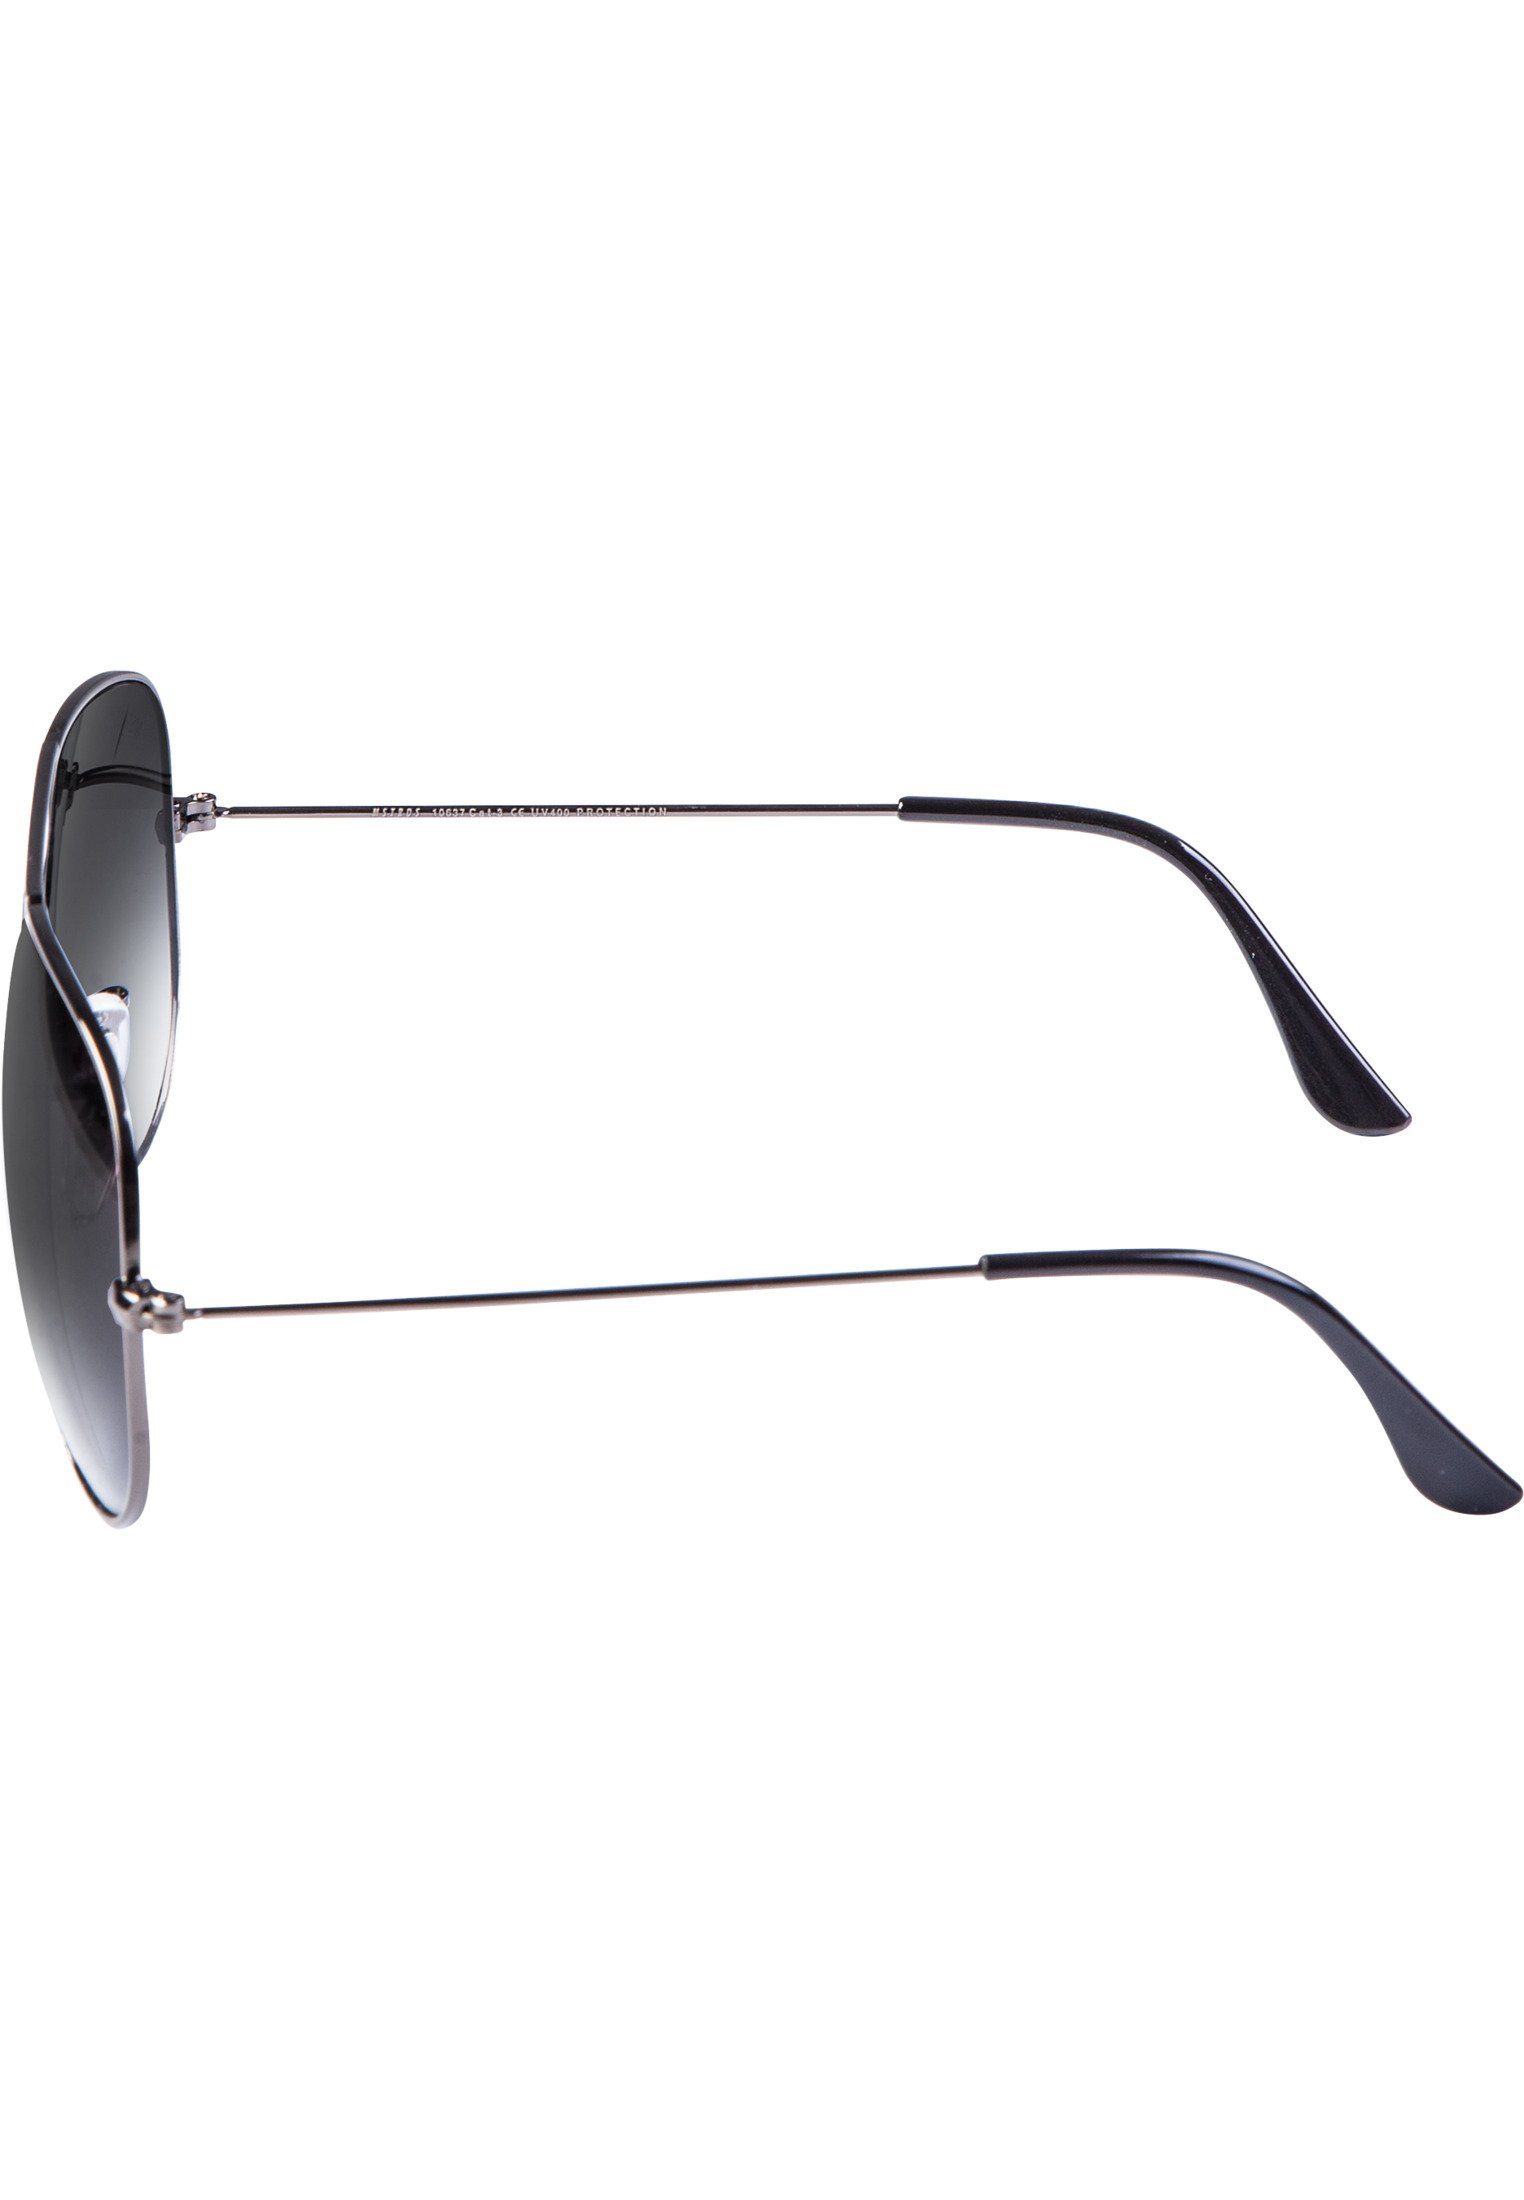 Accessoires Sunglasses MSTRDS Youth Sonnenbrille PureAv gun/grey